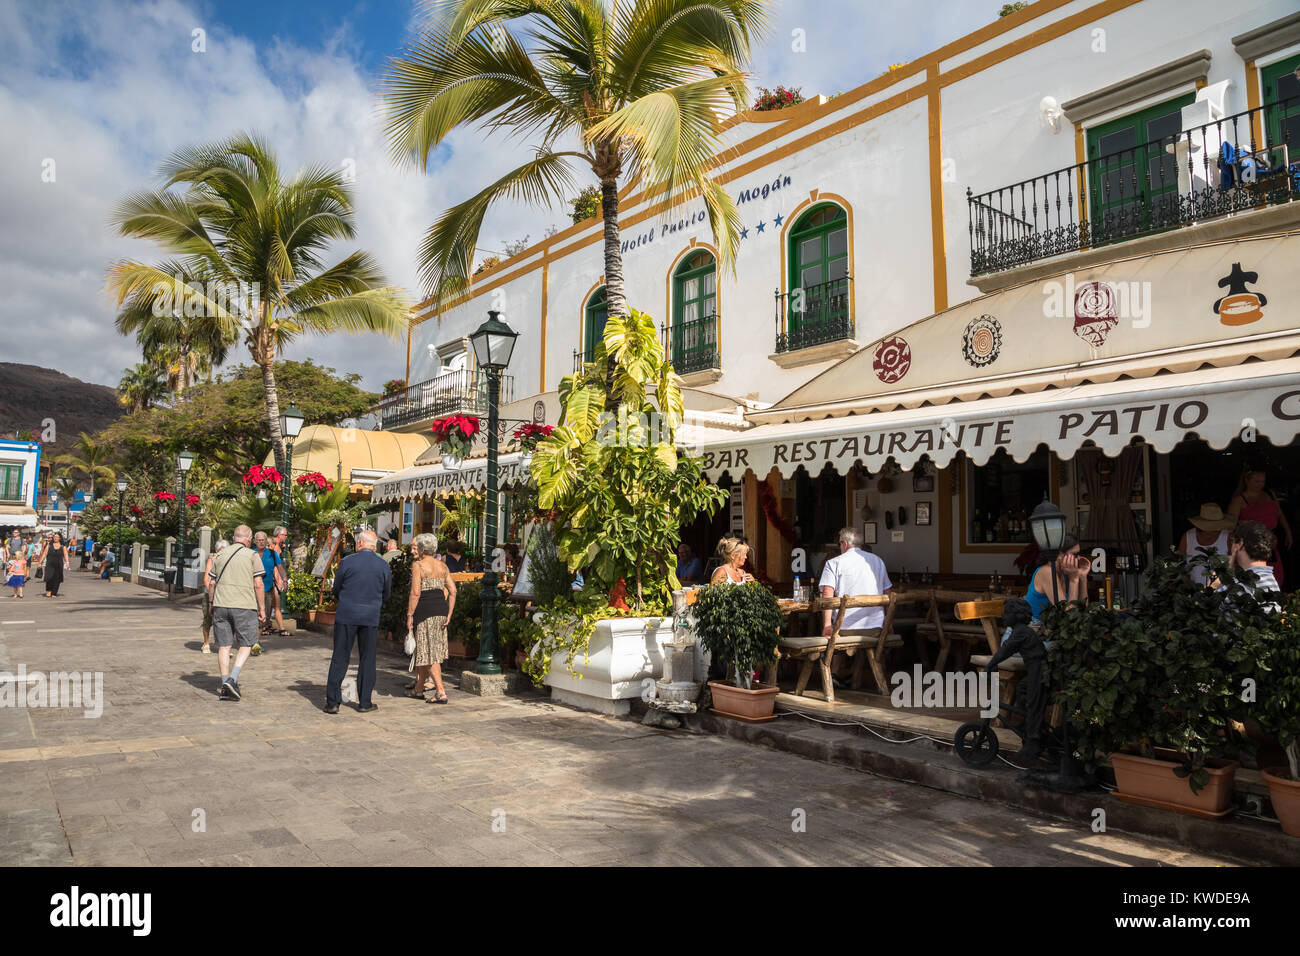 Puerto de Mogan, Gran Canaria in Spain - December 16, 2017: Tourists walking on the promenade and eating at a restaurant in Puerto de Mogan. Stock Photo